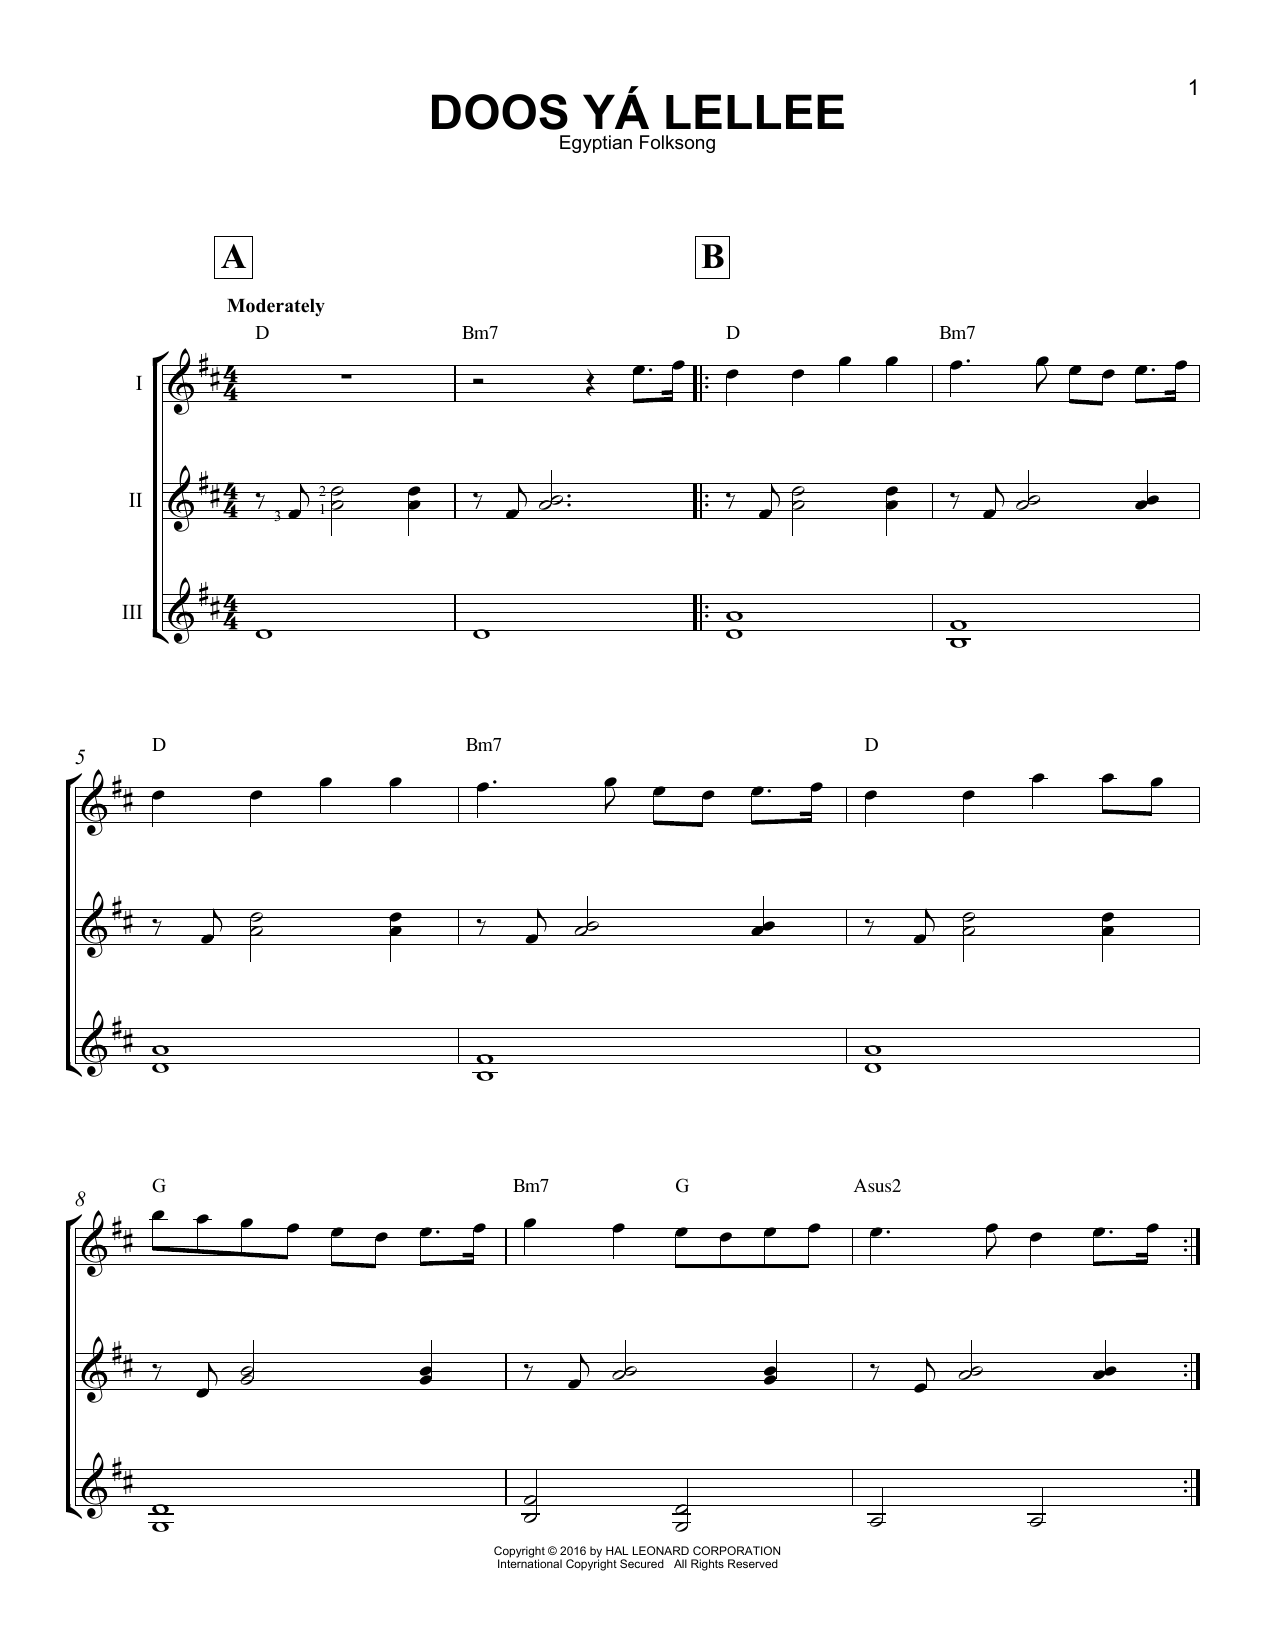 Egyptian Folksong Doos Ya Lellee Sheet Music Notes & Chords for Guitar Ensemble - Download or Print PDF